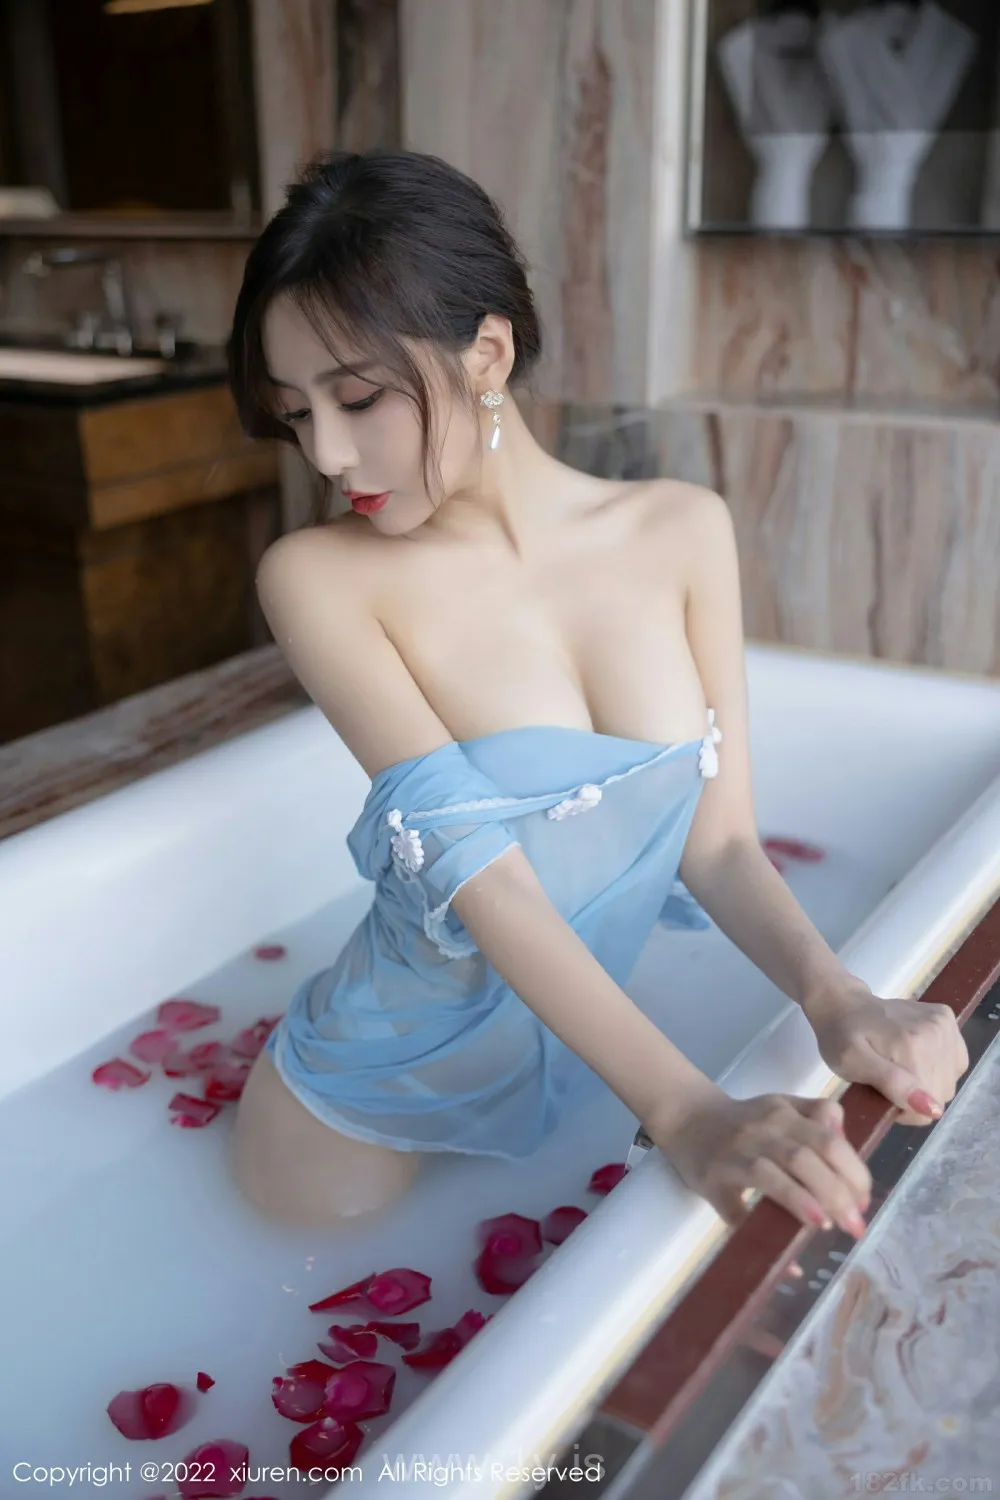 XIUREN(秀人网) NO.4581 Pretty Asian Hottie 王馨瑶yanni_浴缸写真